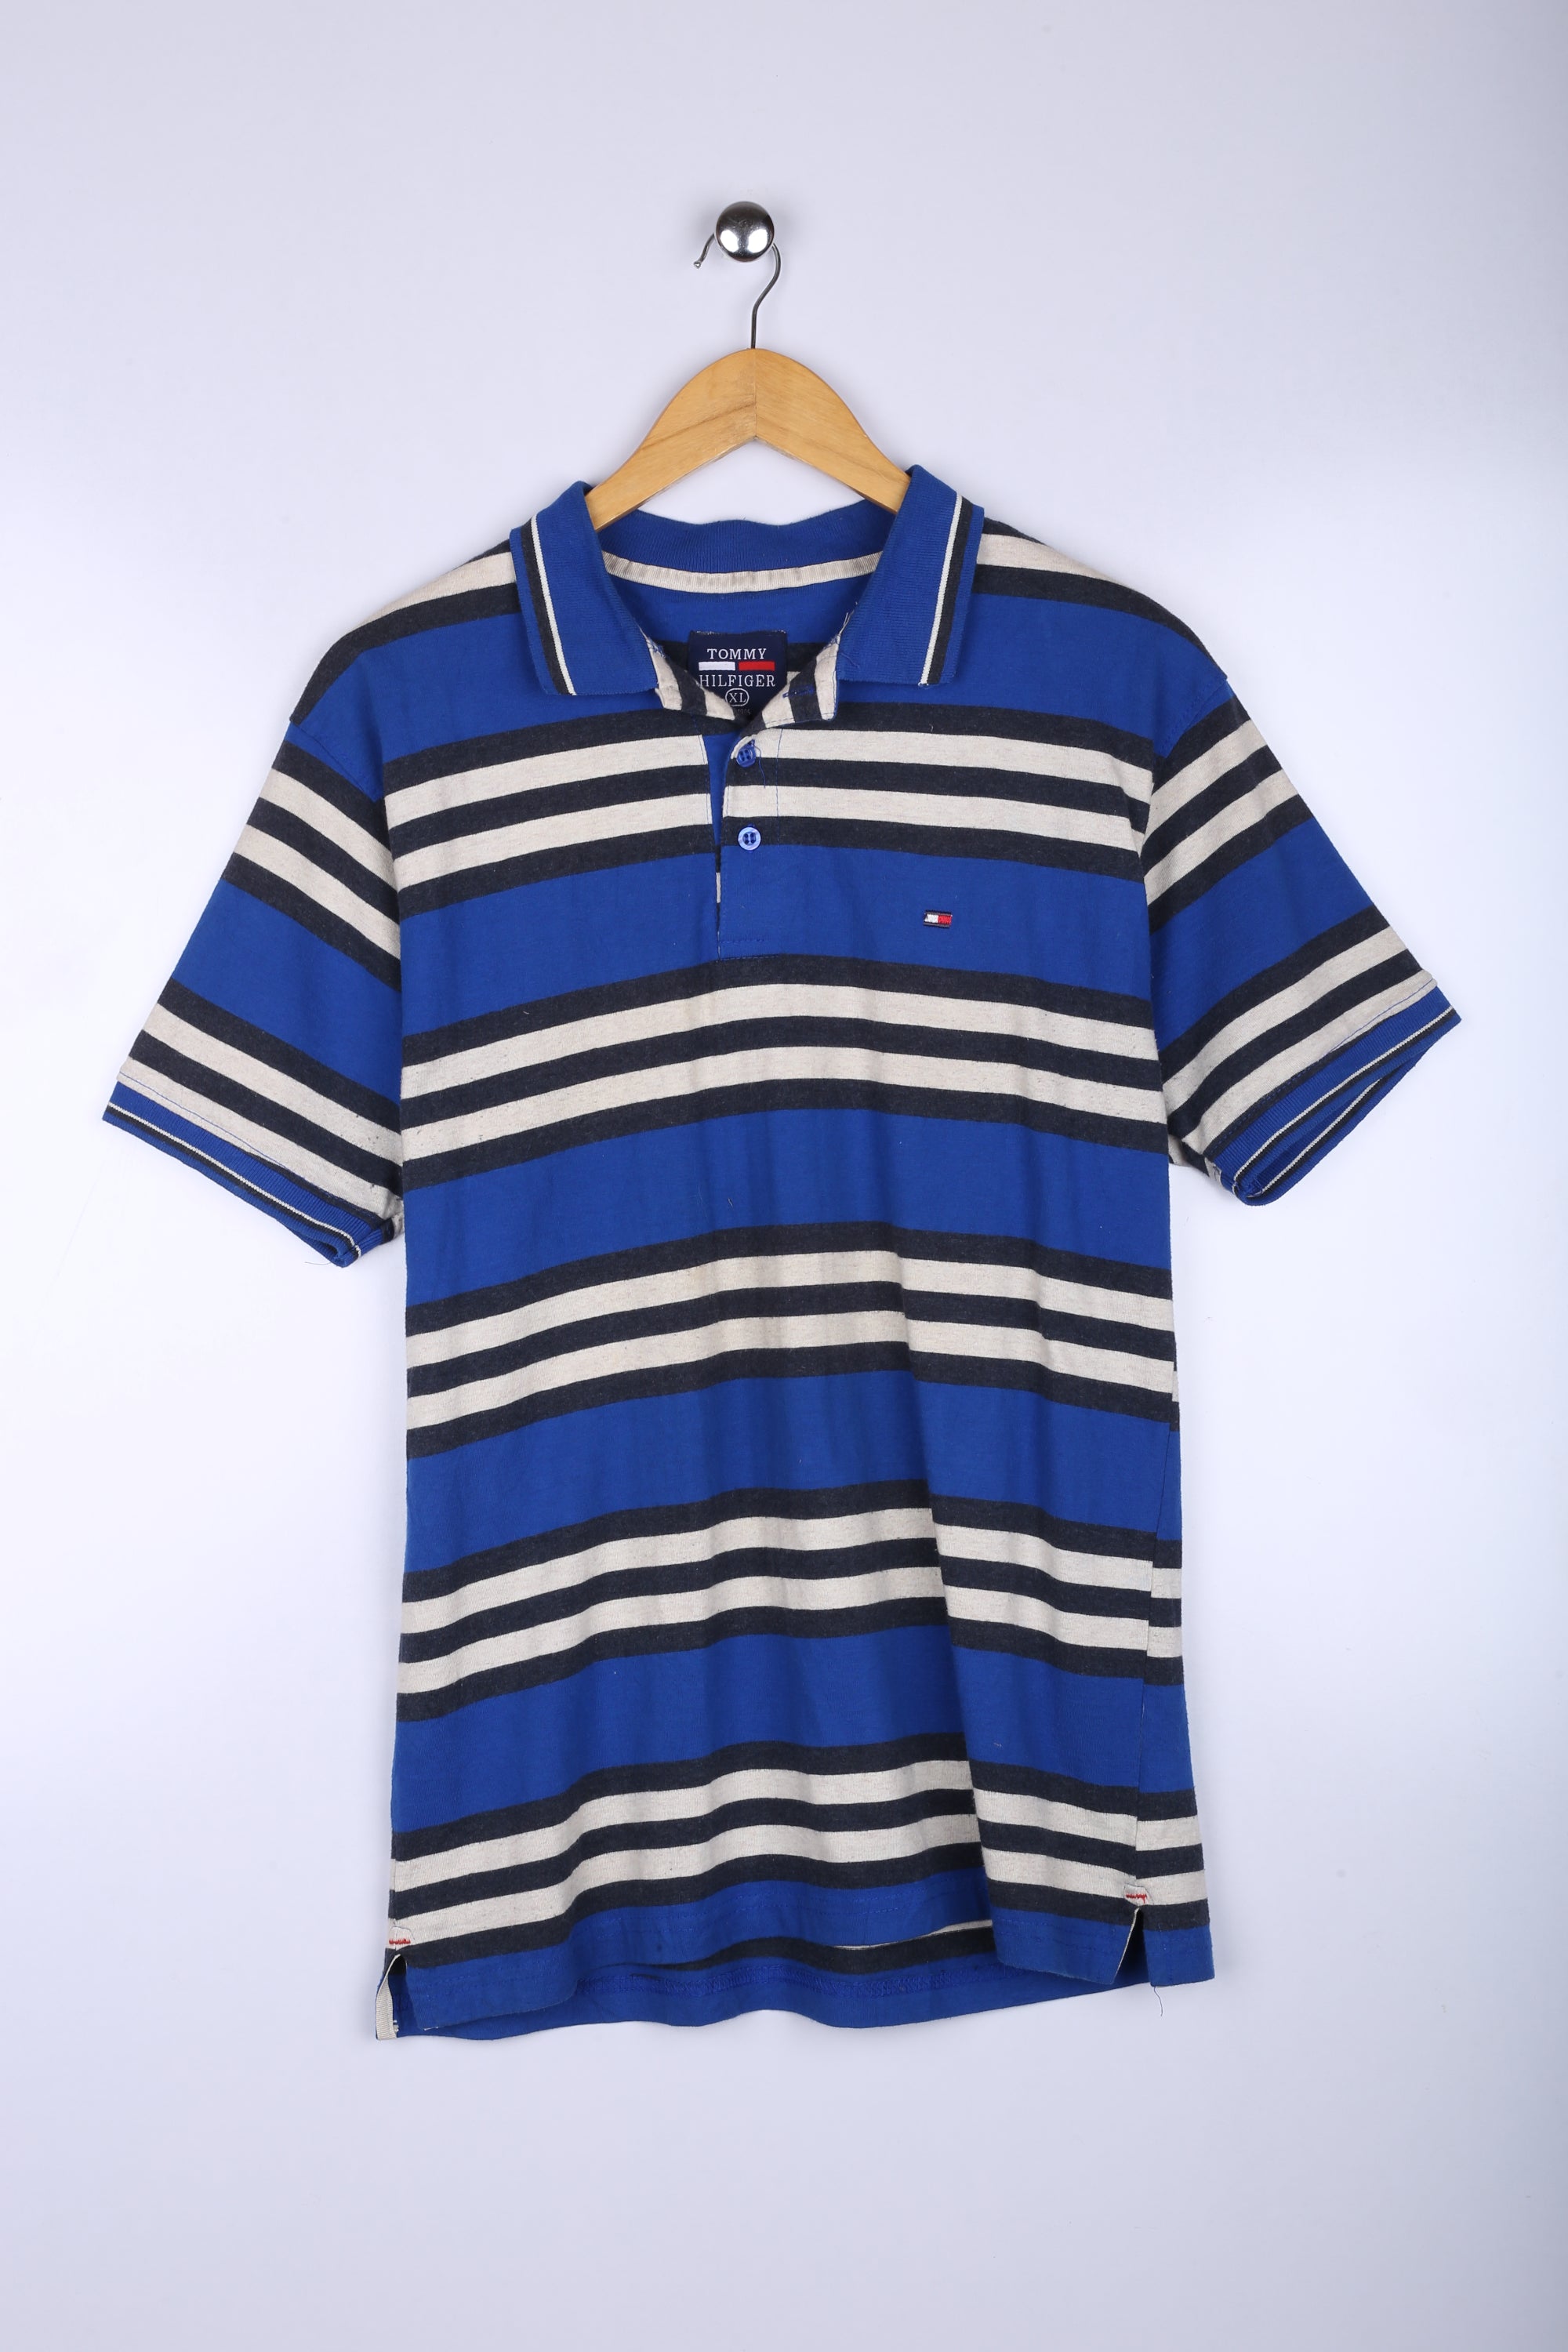 Vintage Tommy Hilfiger Polo Blue Stripe